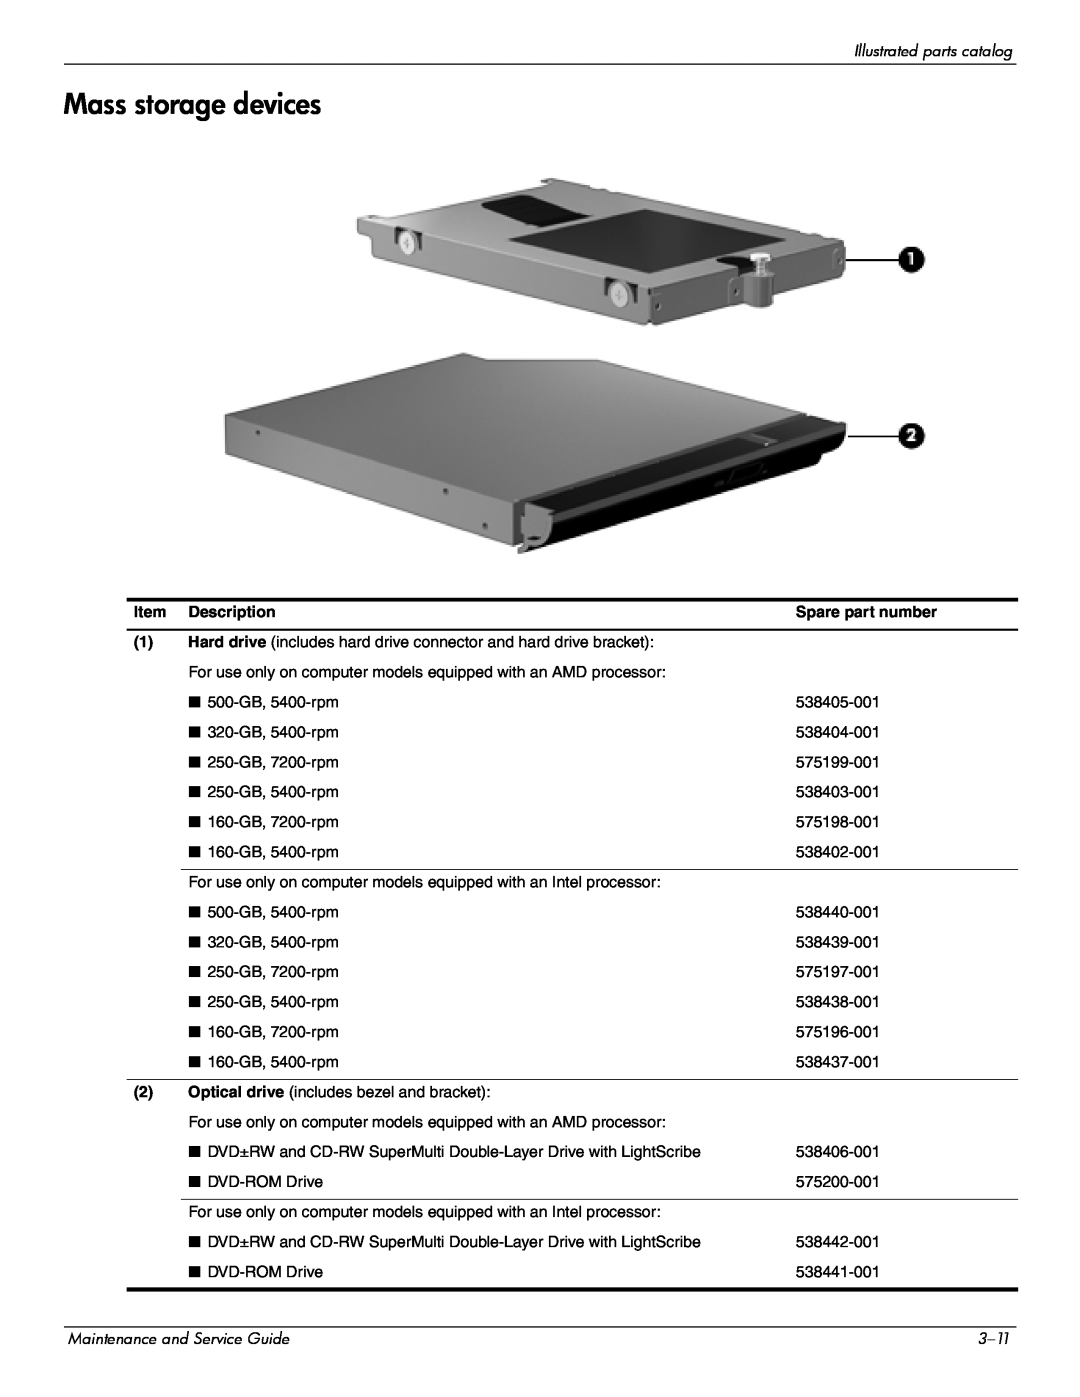 Compaq 511, 510, 515 manual Mass storage devices 